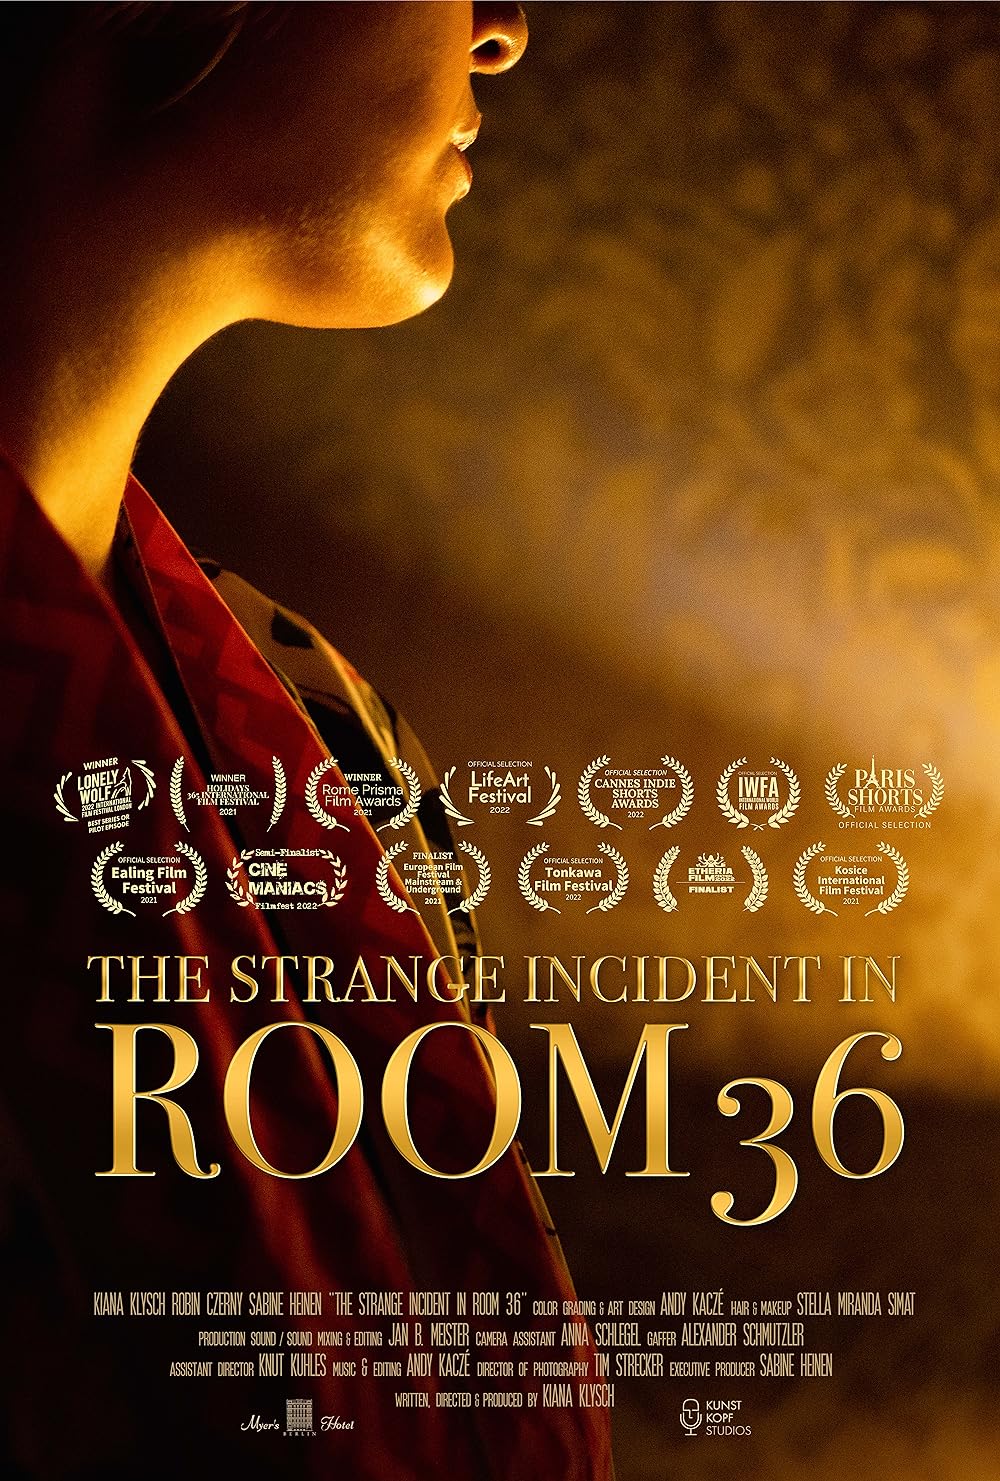 The Strange Incident in Room 36